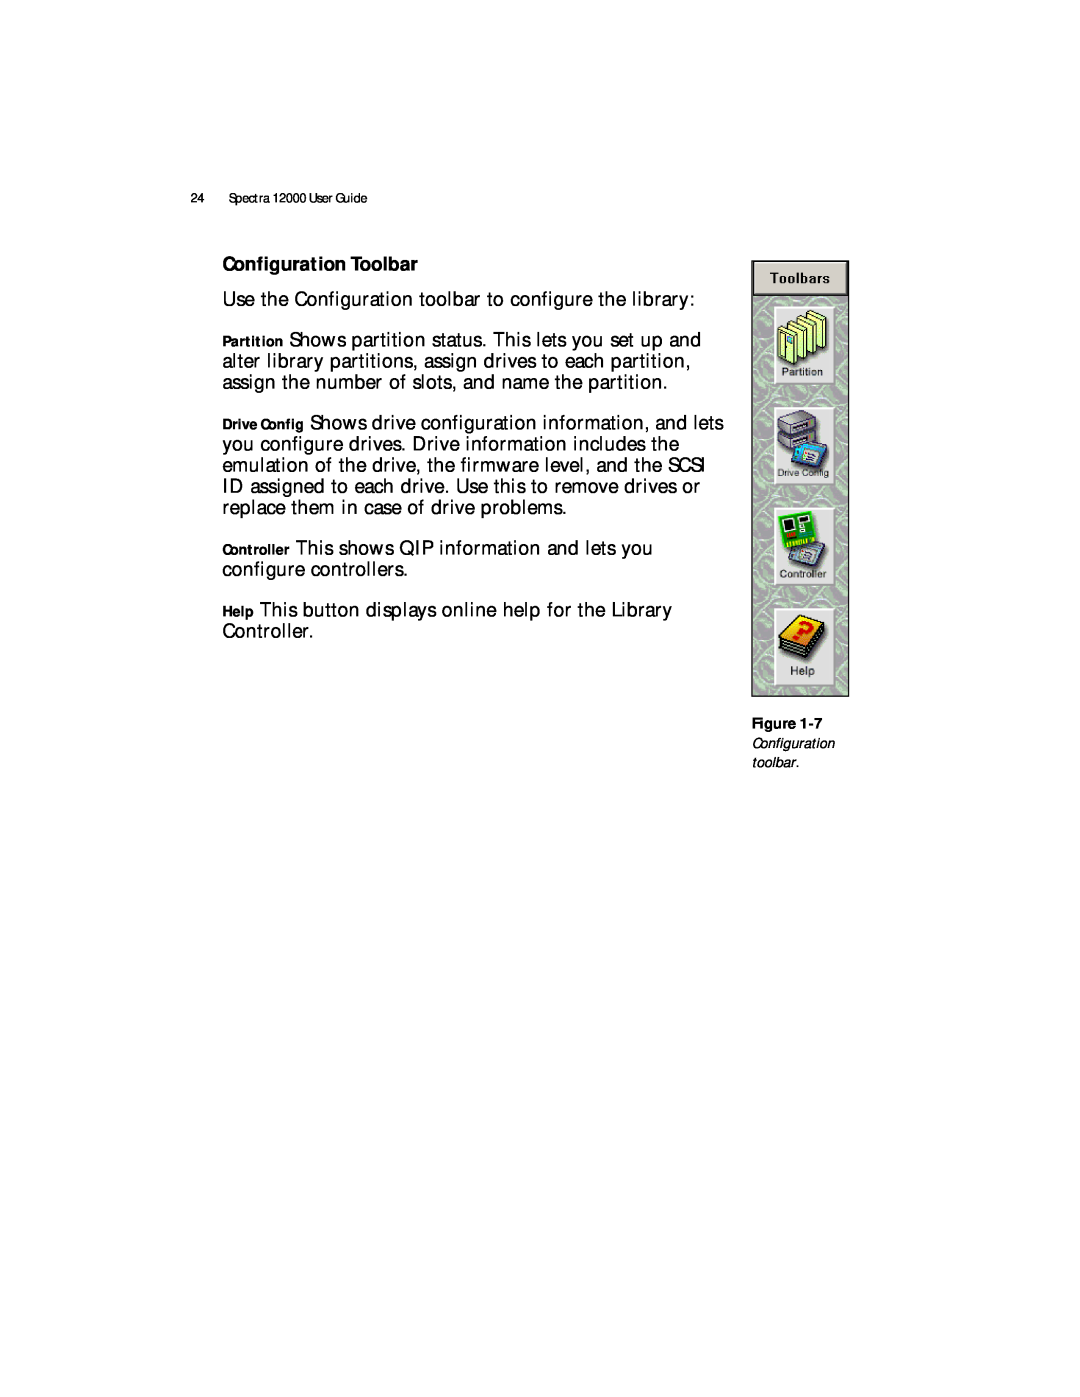 Spectra Logic manual Configuration Toolbar, Spectra 12000 User Guide 